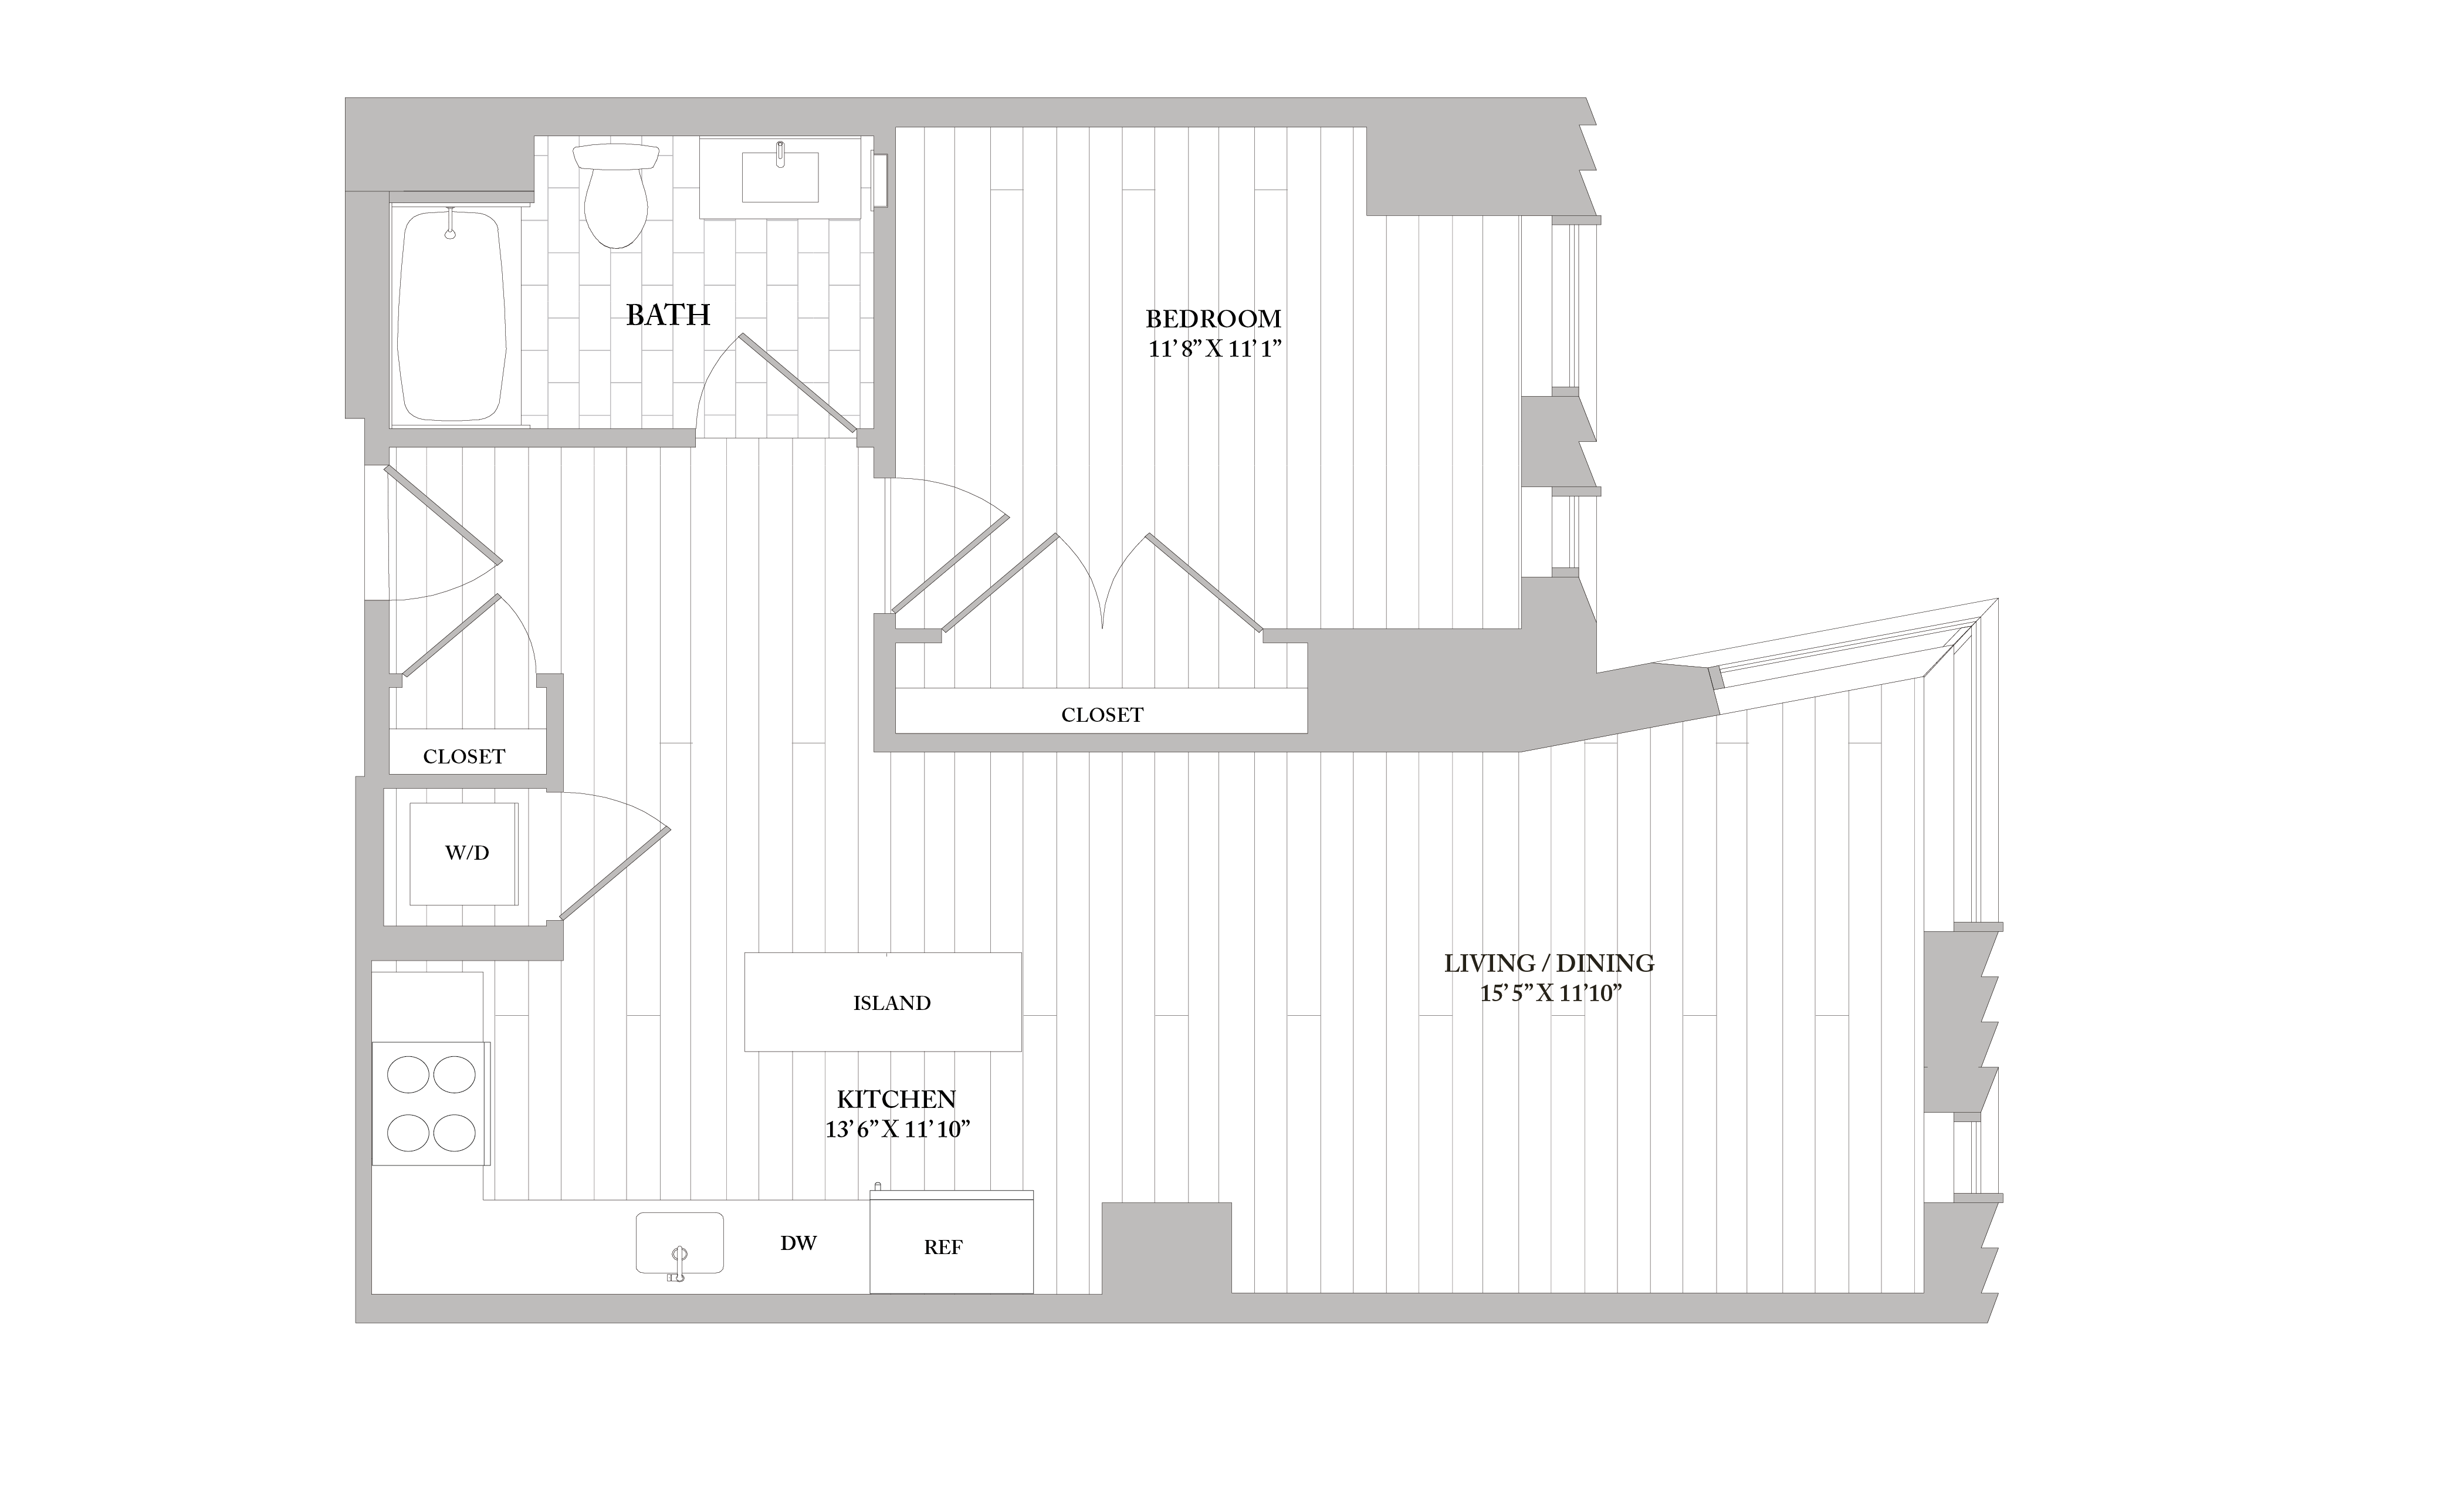 Apartment 2406 floorplan